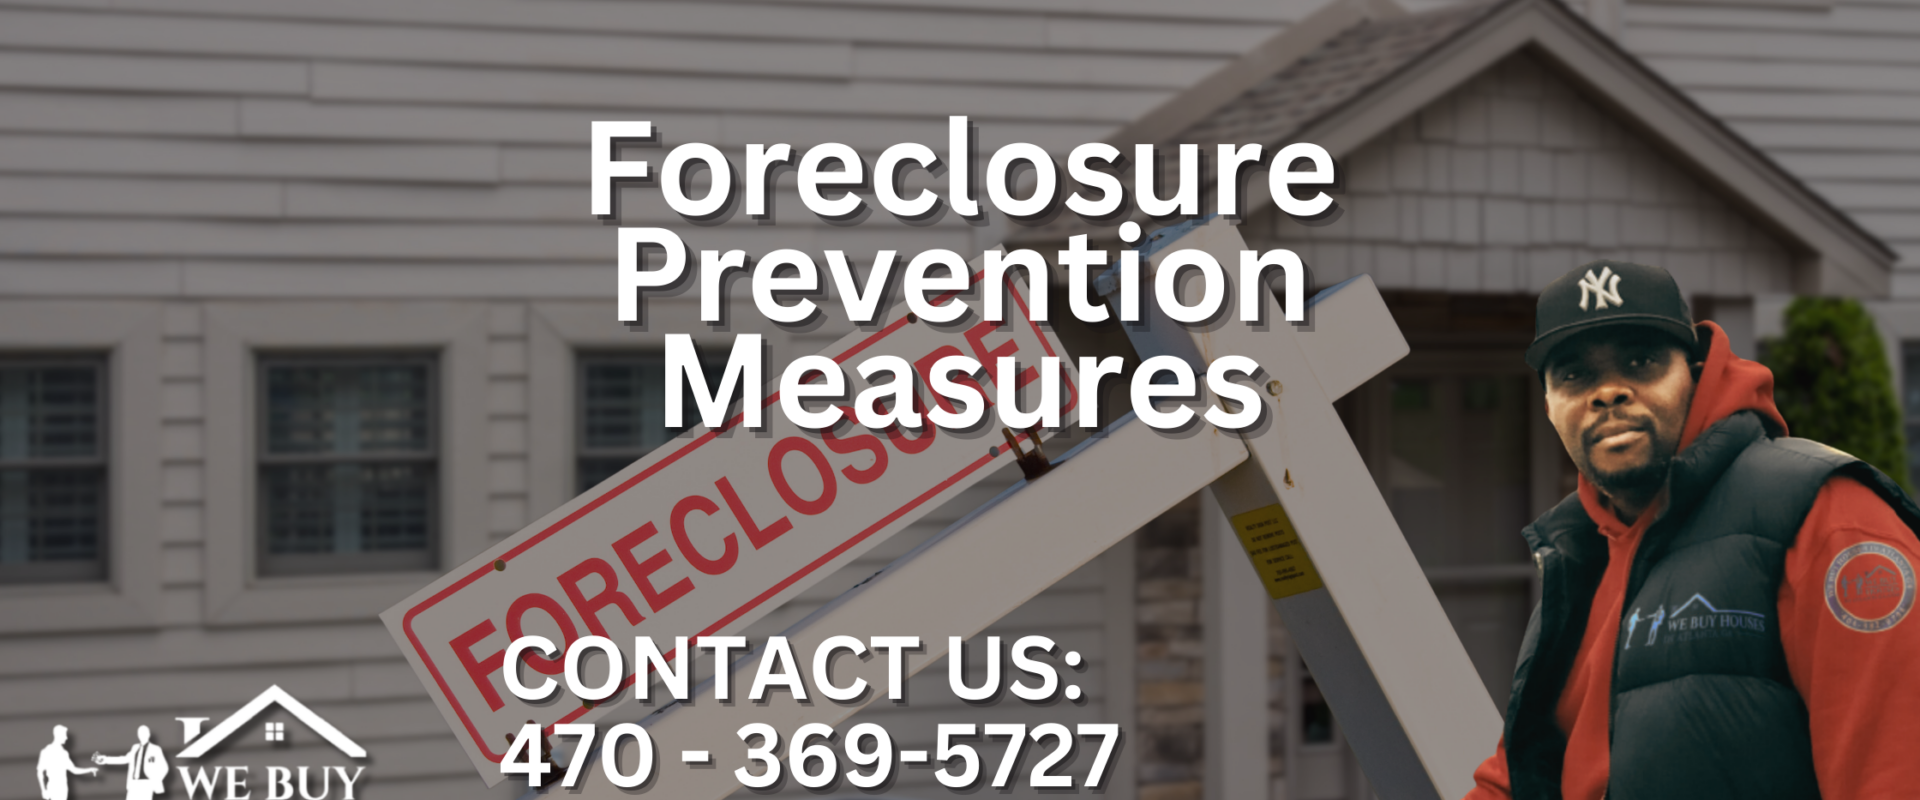 Foreclosure-Prevention-Measures